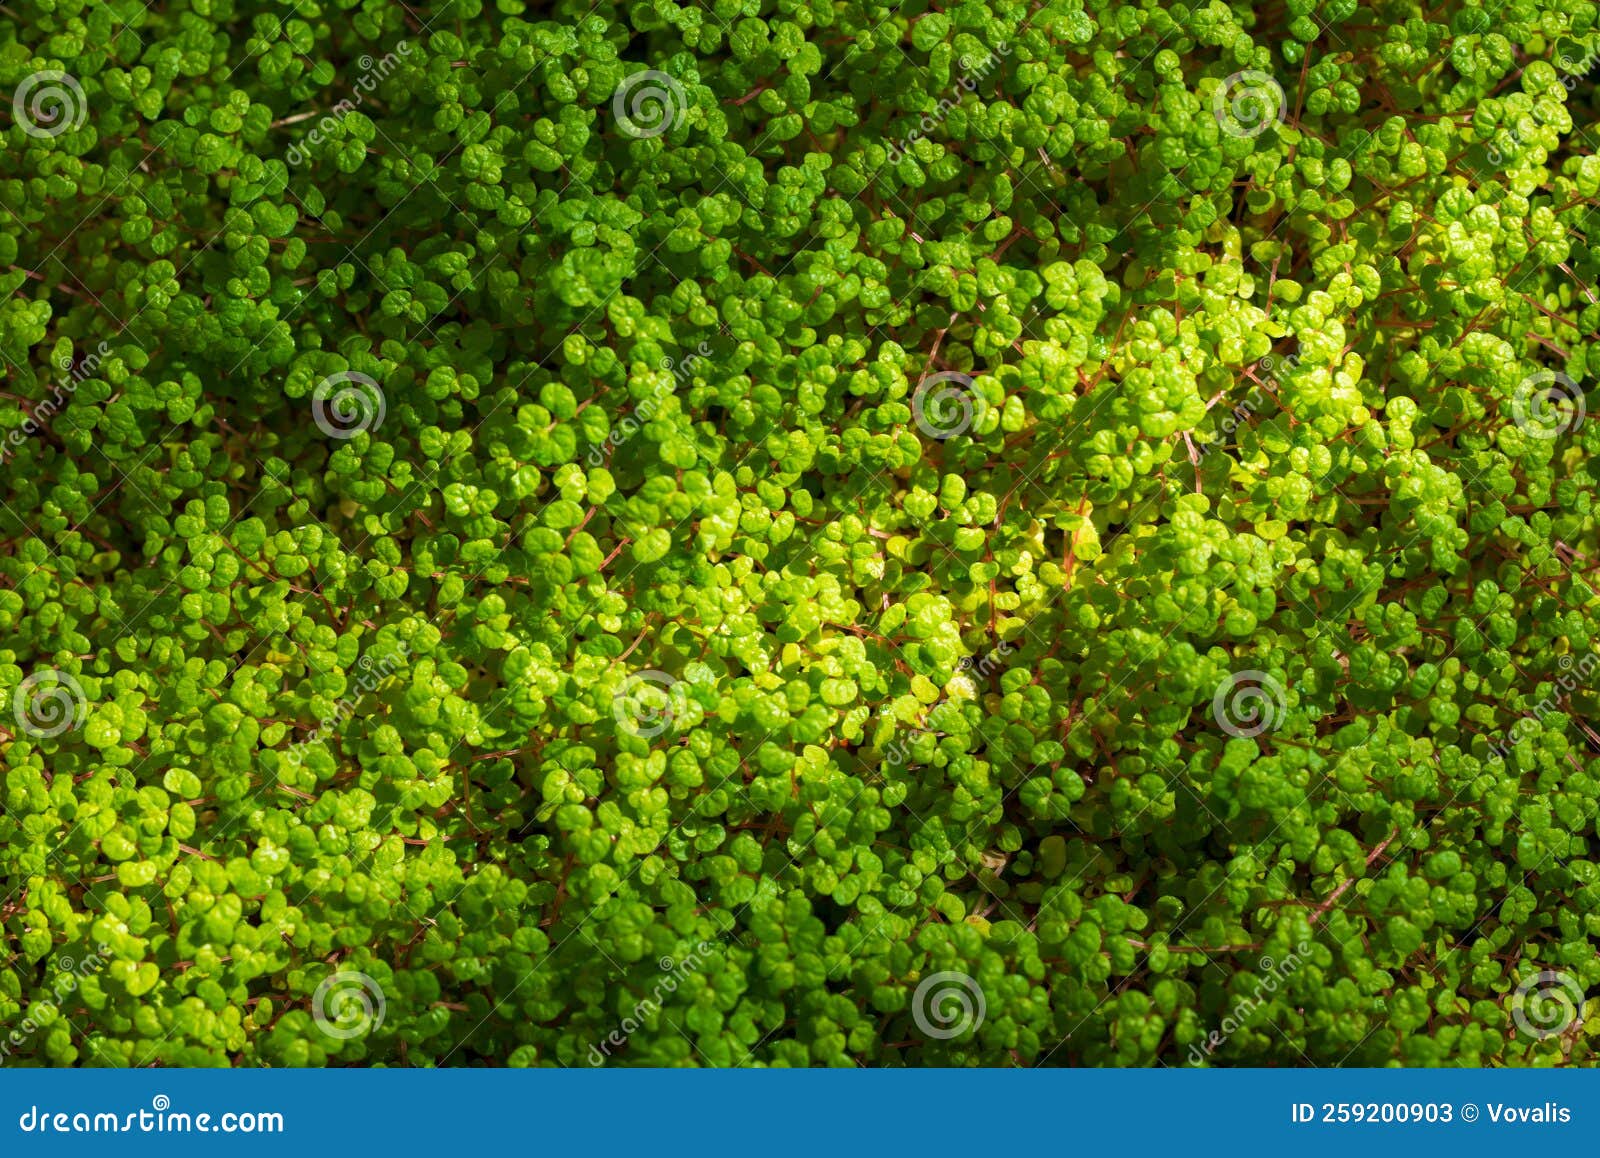 lush green helxine soleirolii background. soleirolia gaud